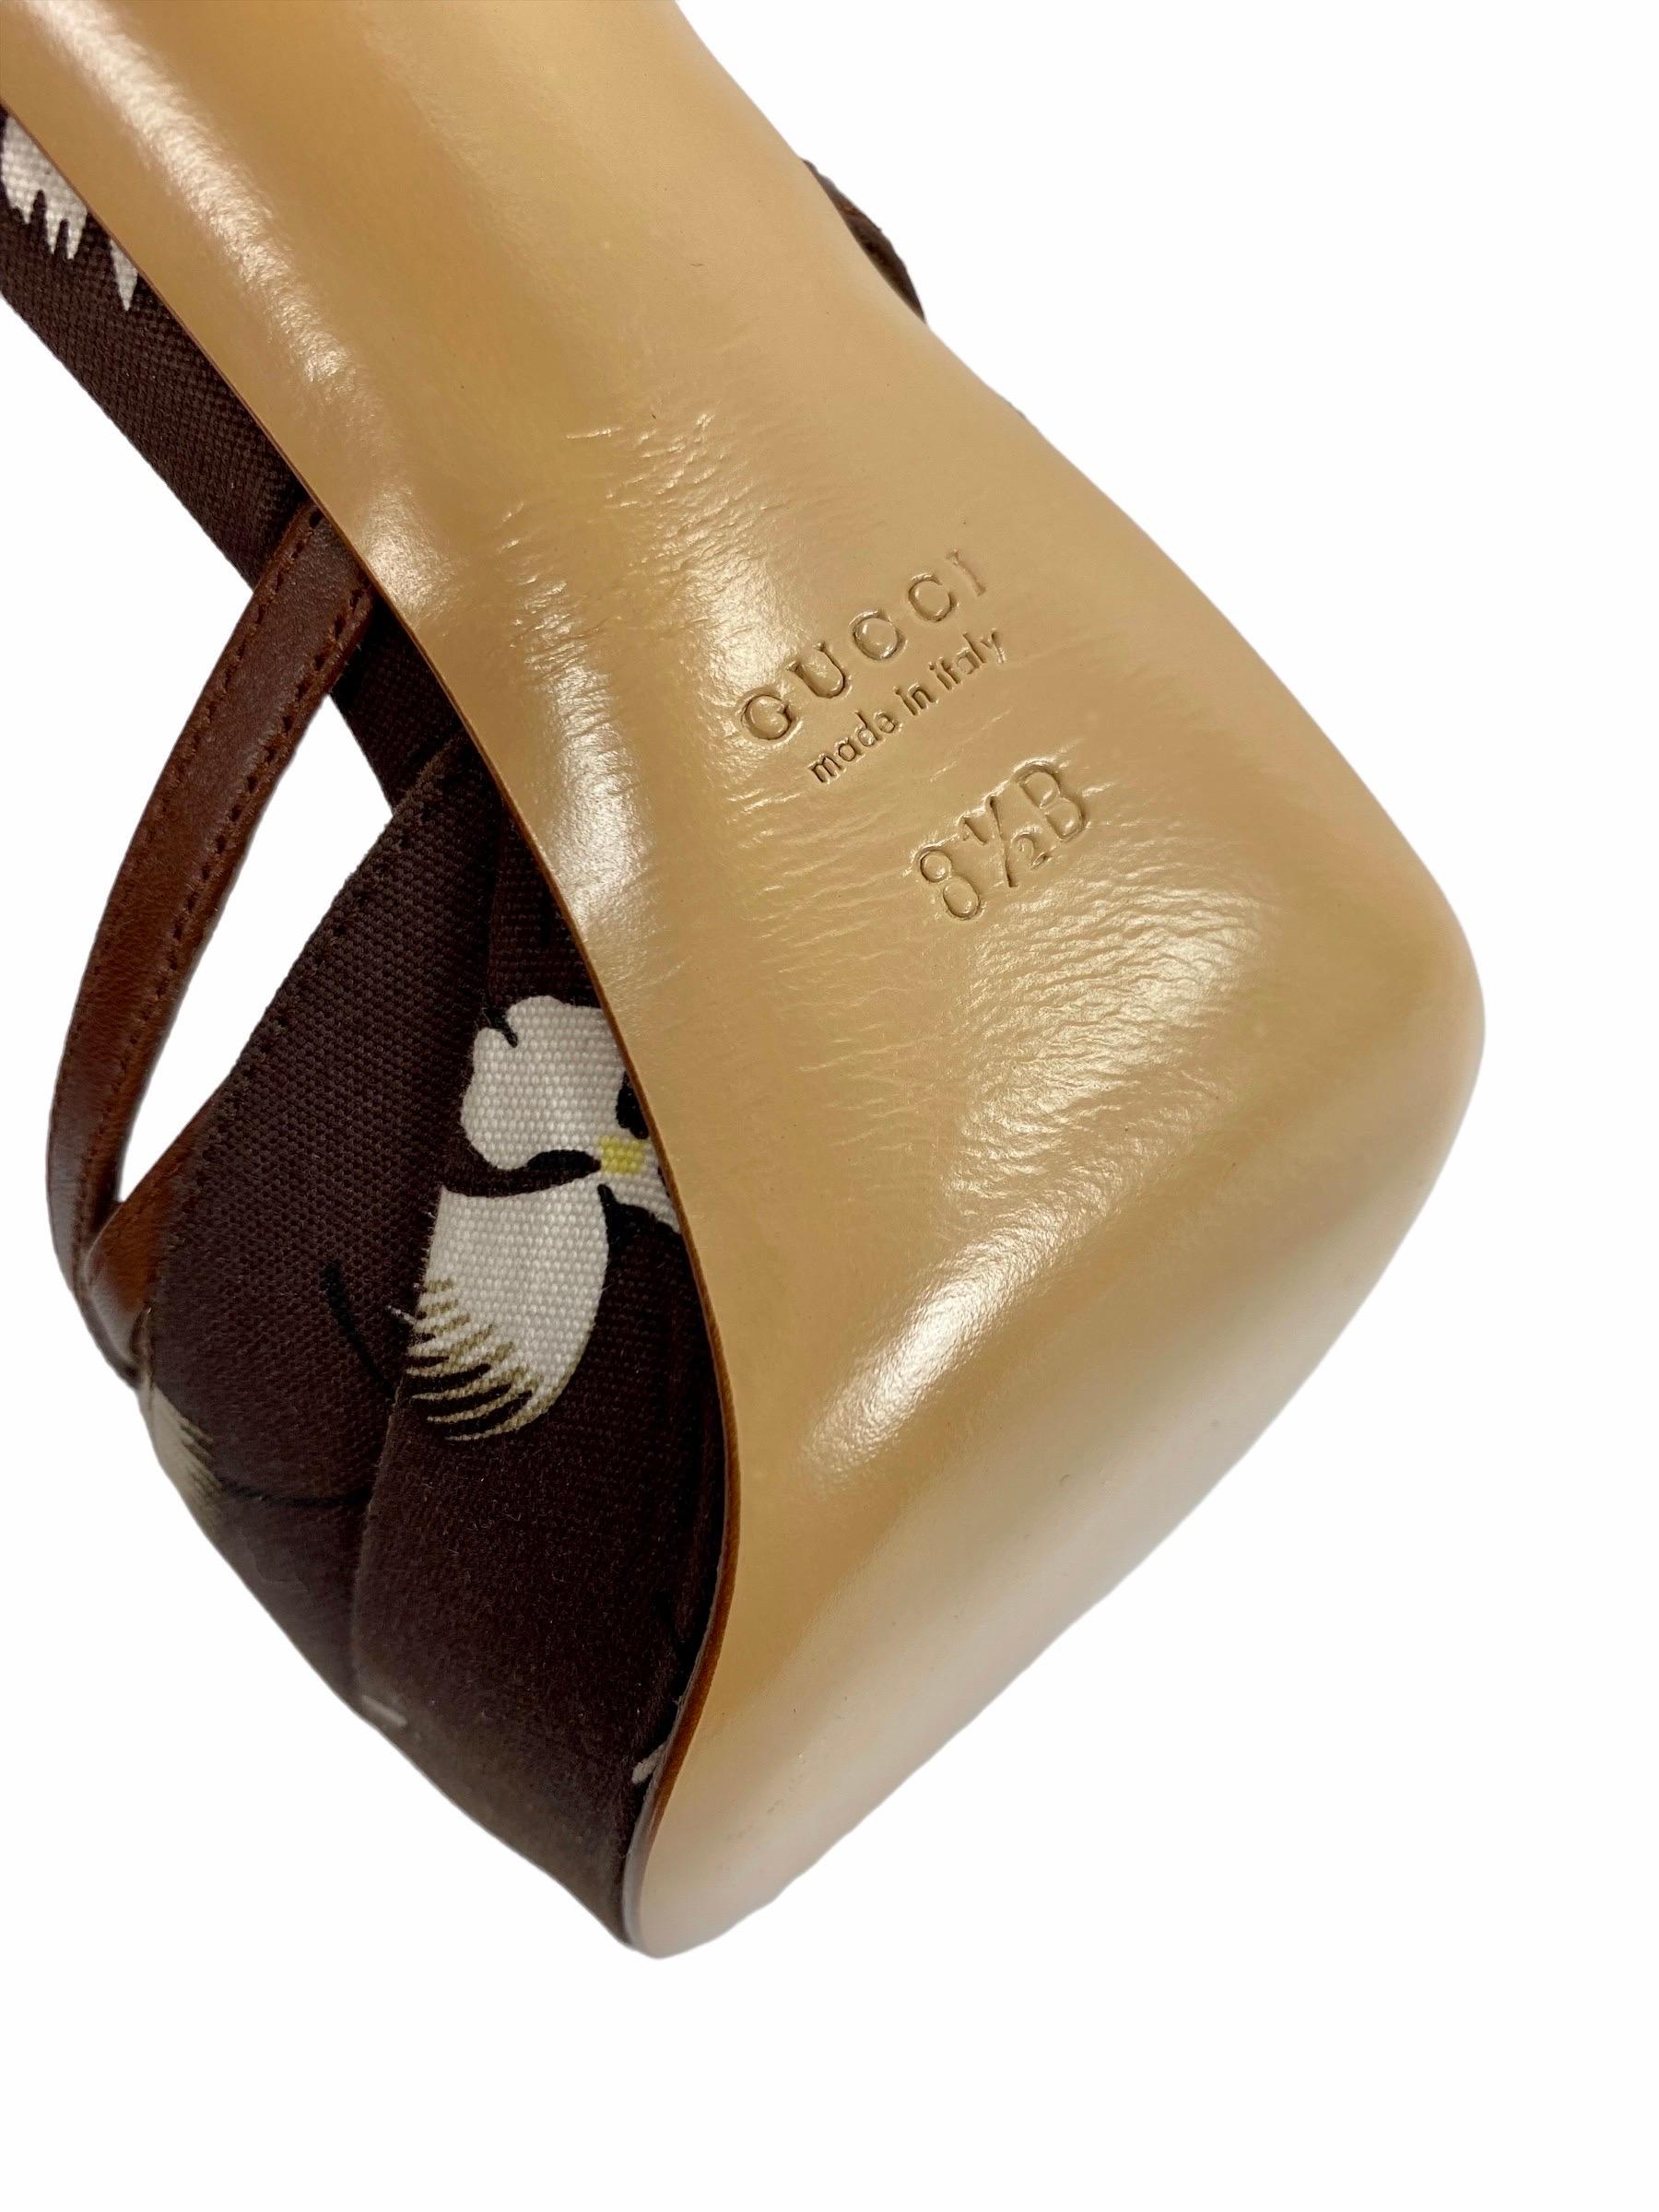 S/S 2006 Gucci Floral print Brown Platform Shoes Size 8.5 For Sale 1